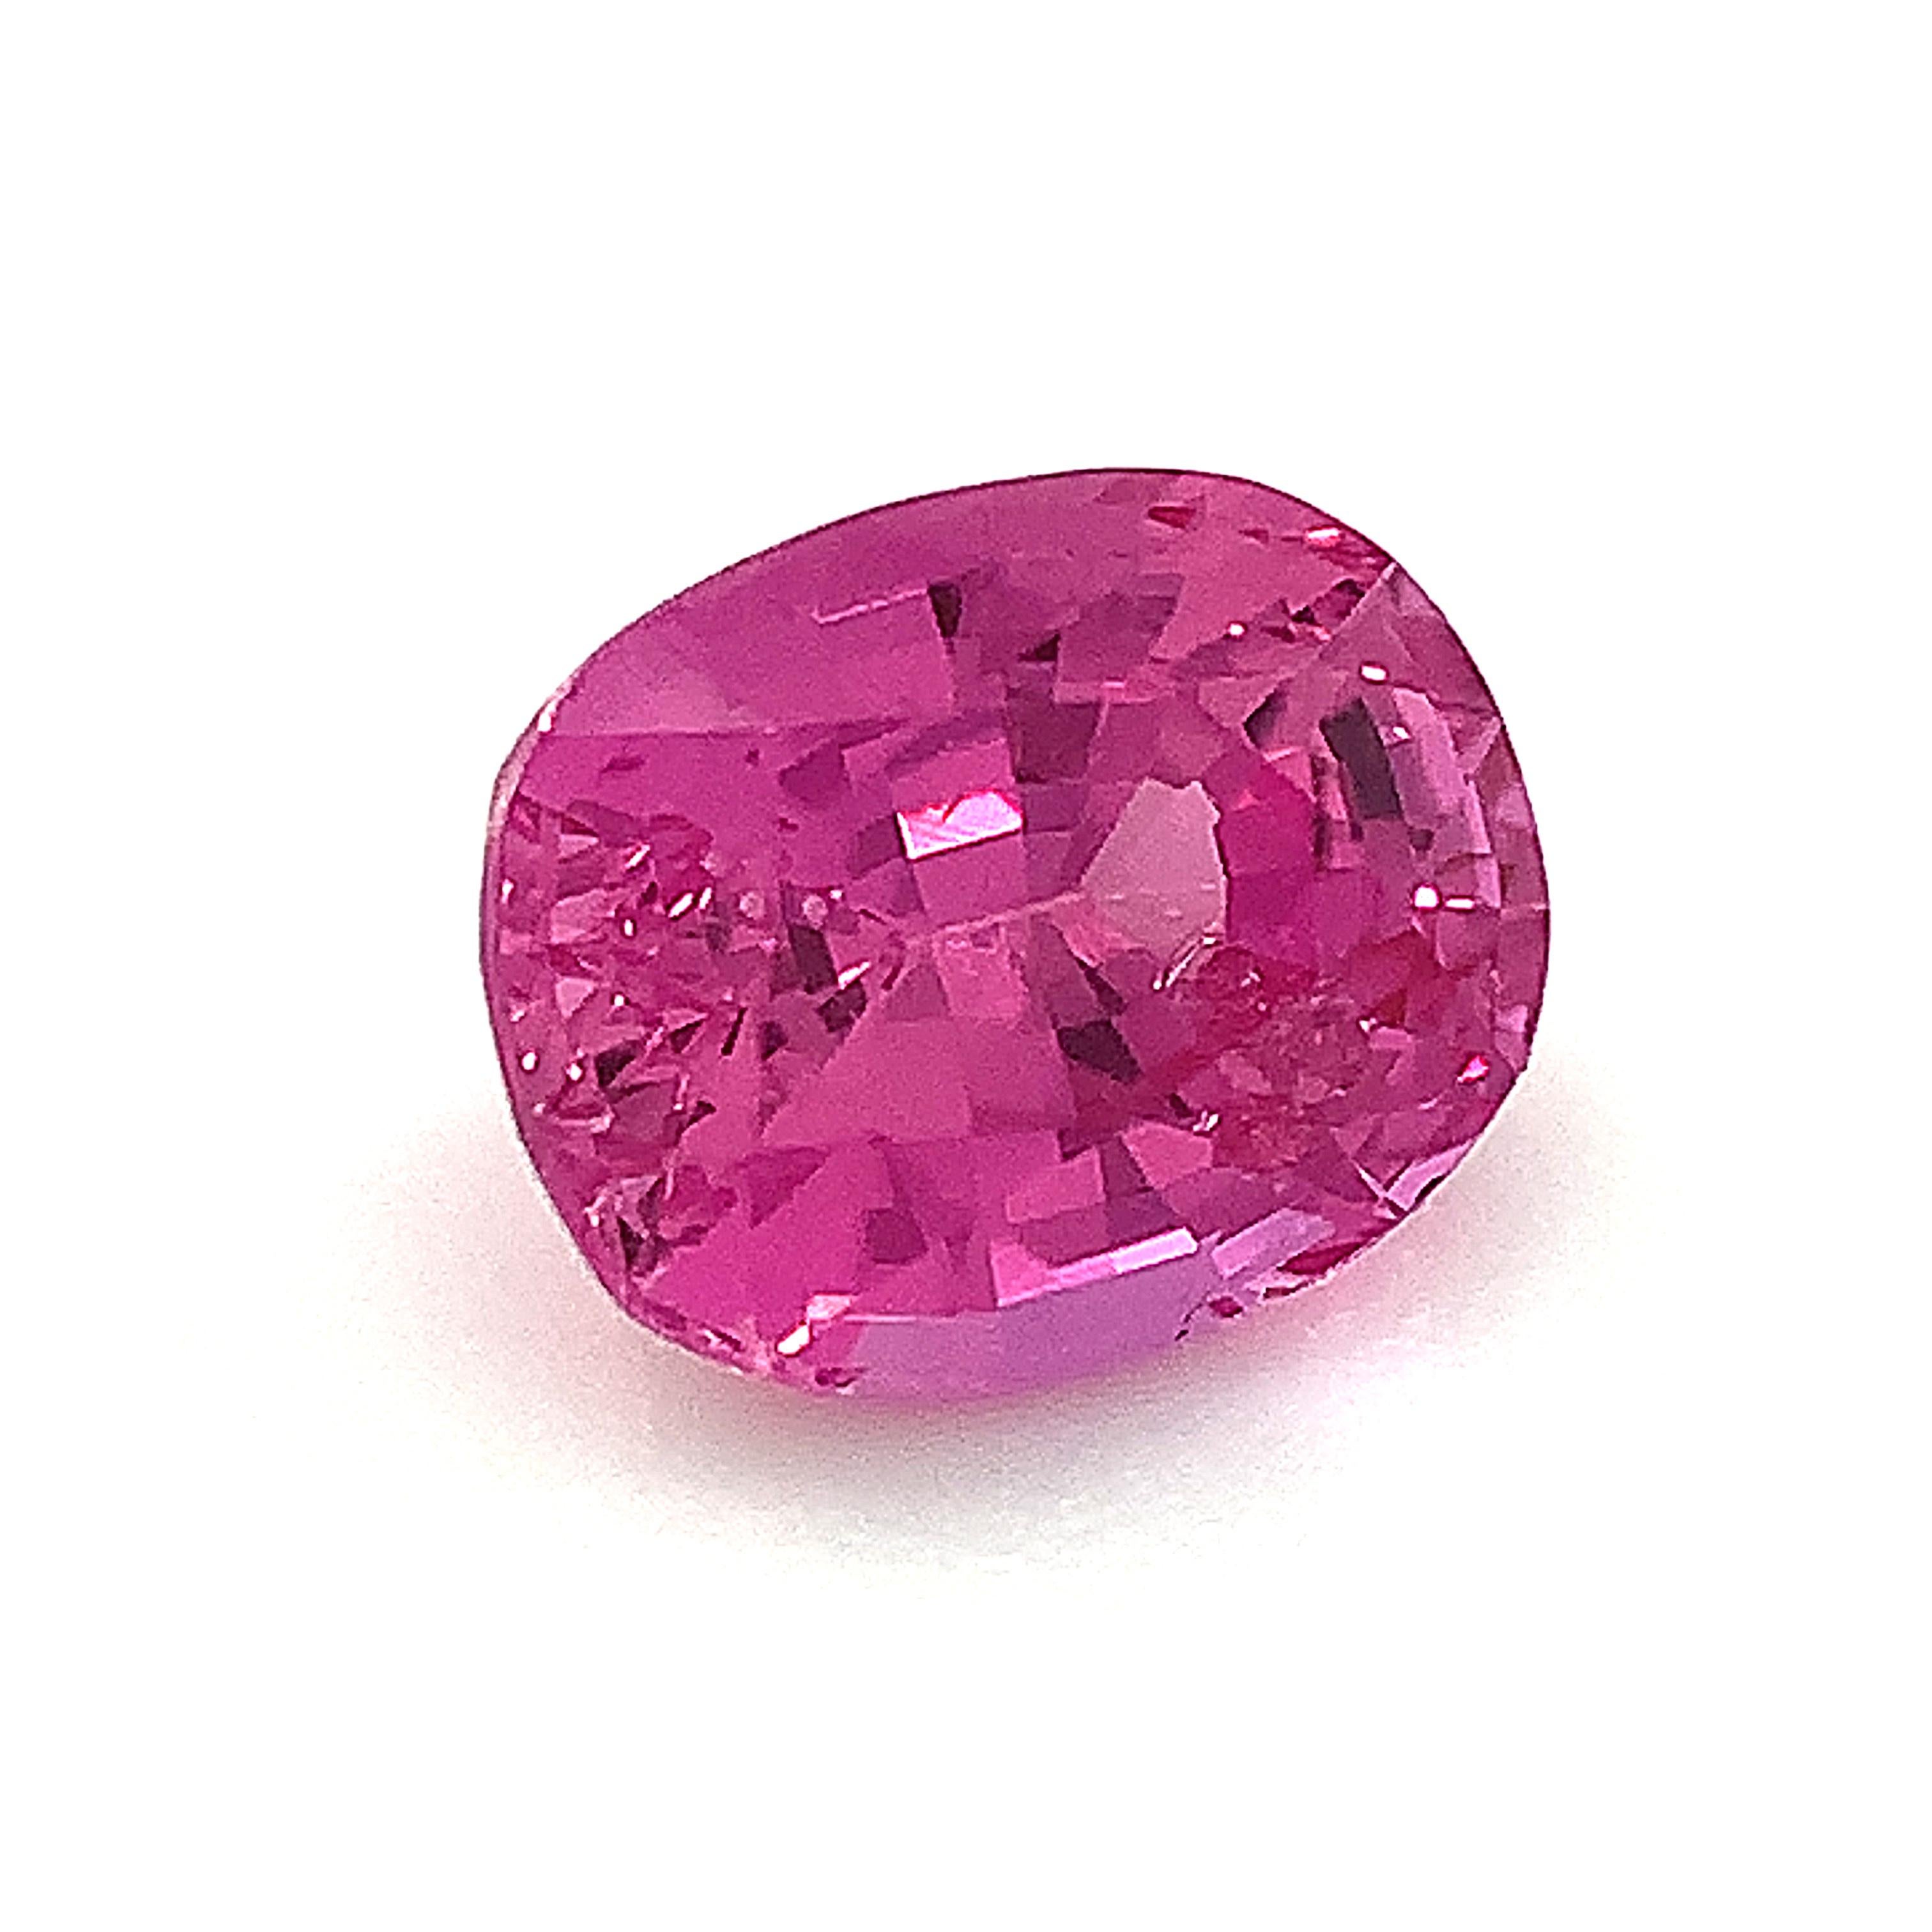 Artisan Unheated 1.39 Carat Burmese Pink Sapphire, Unset Loose Gemstone, GIA Certified For Sale